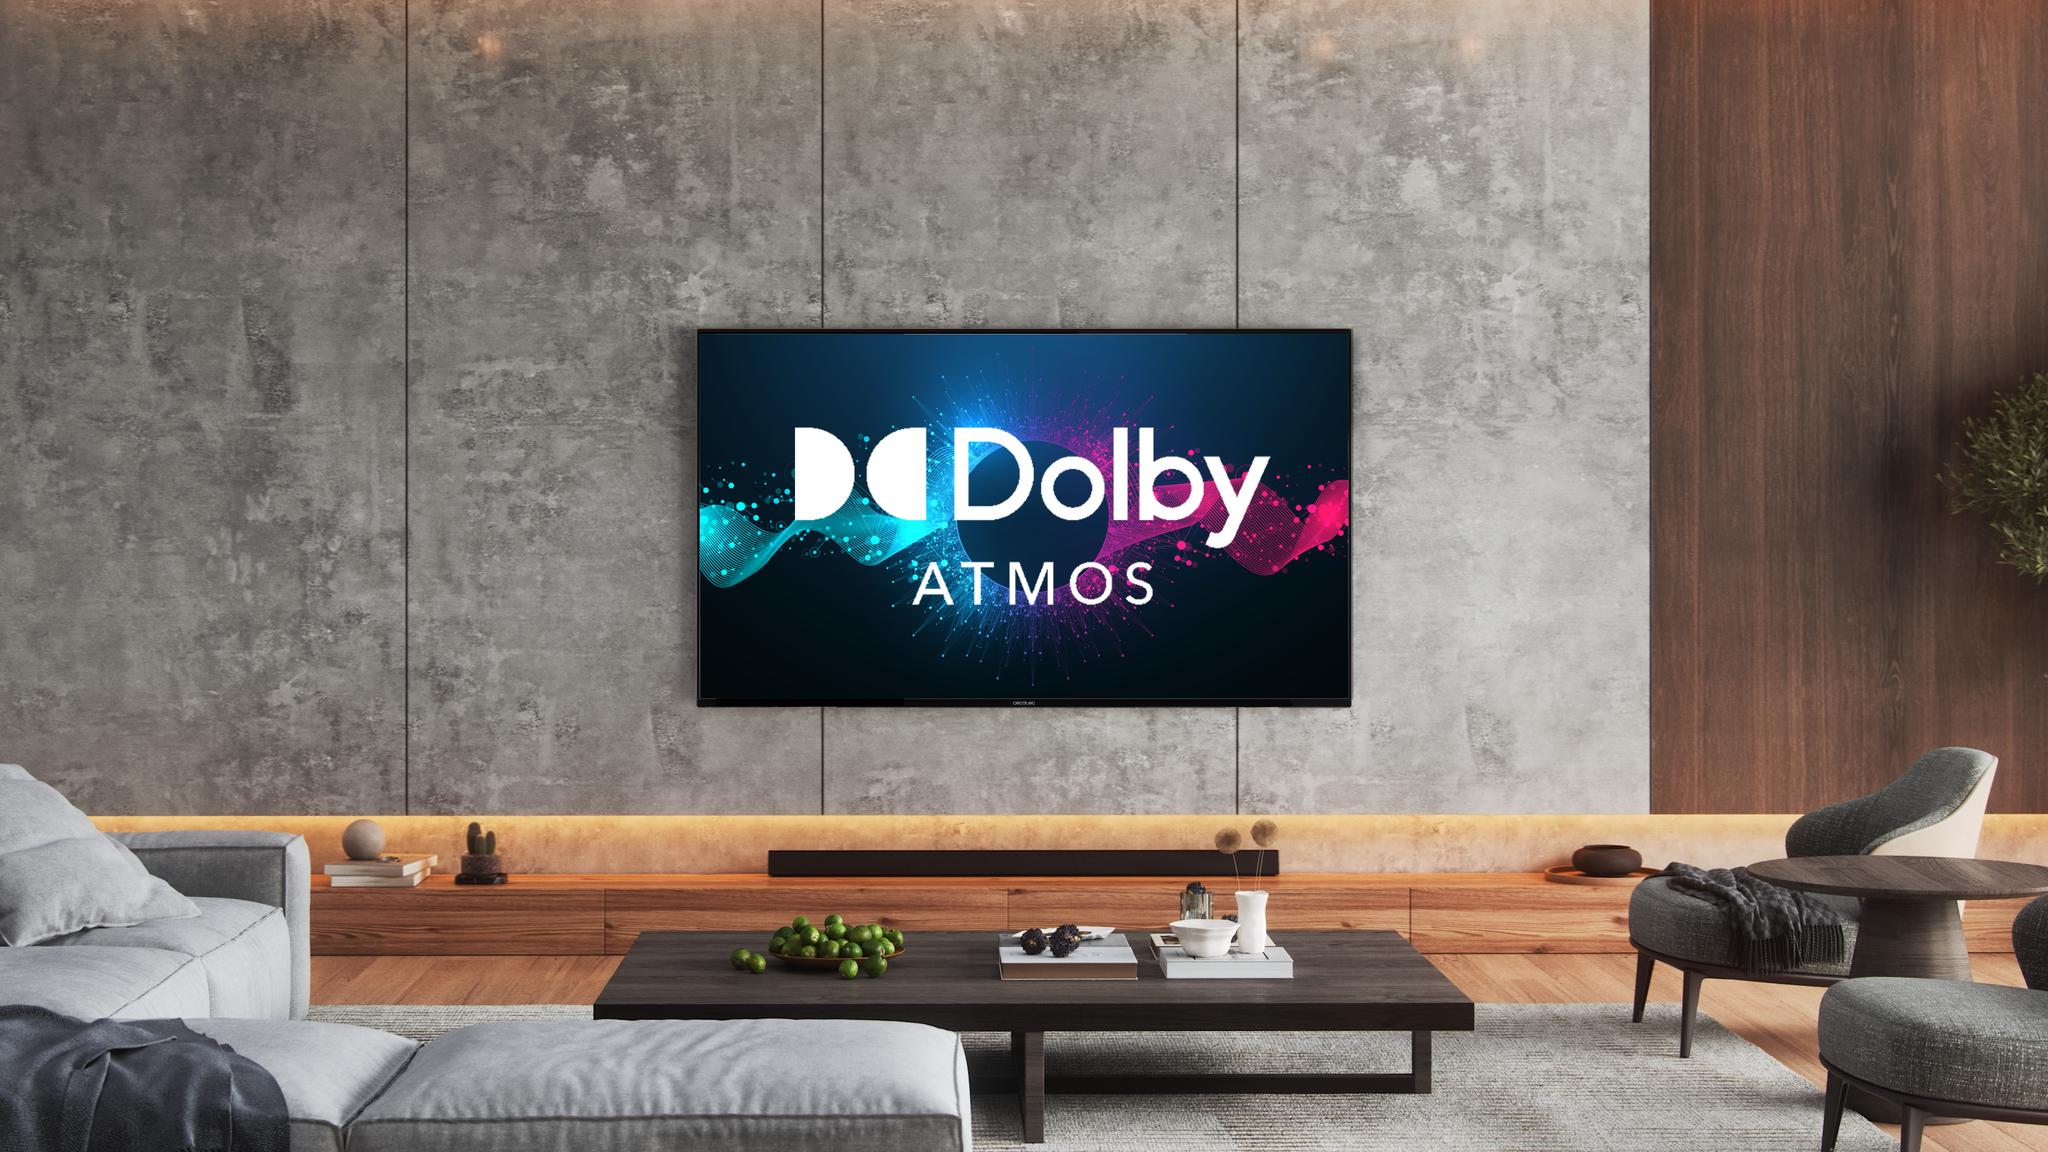 Dolby Atmos sonido envolvente